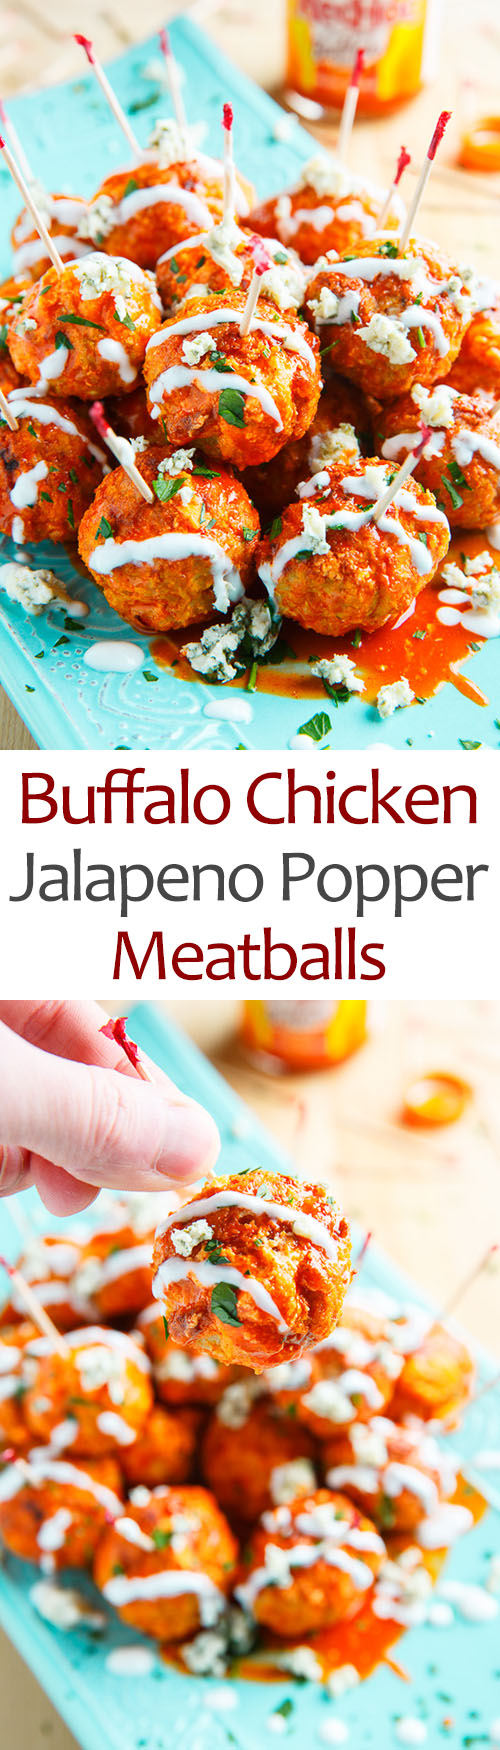 Jalapeno Popper Stuffed Buffalo Chicken Meatballs